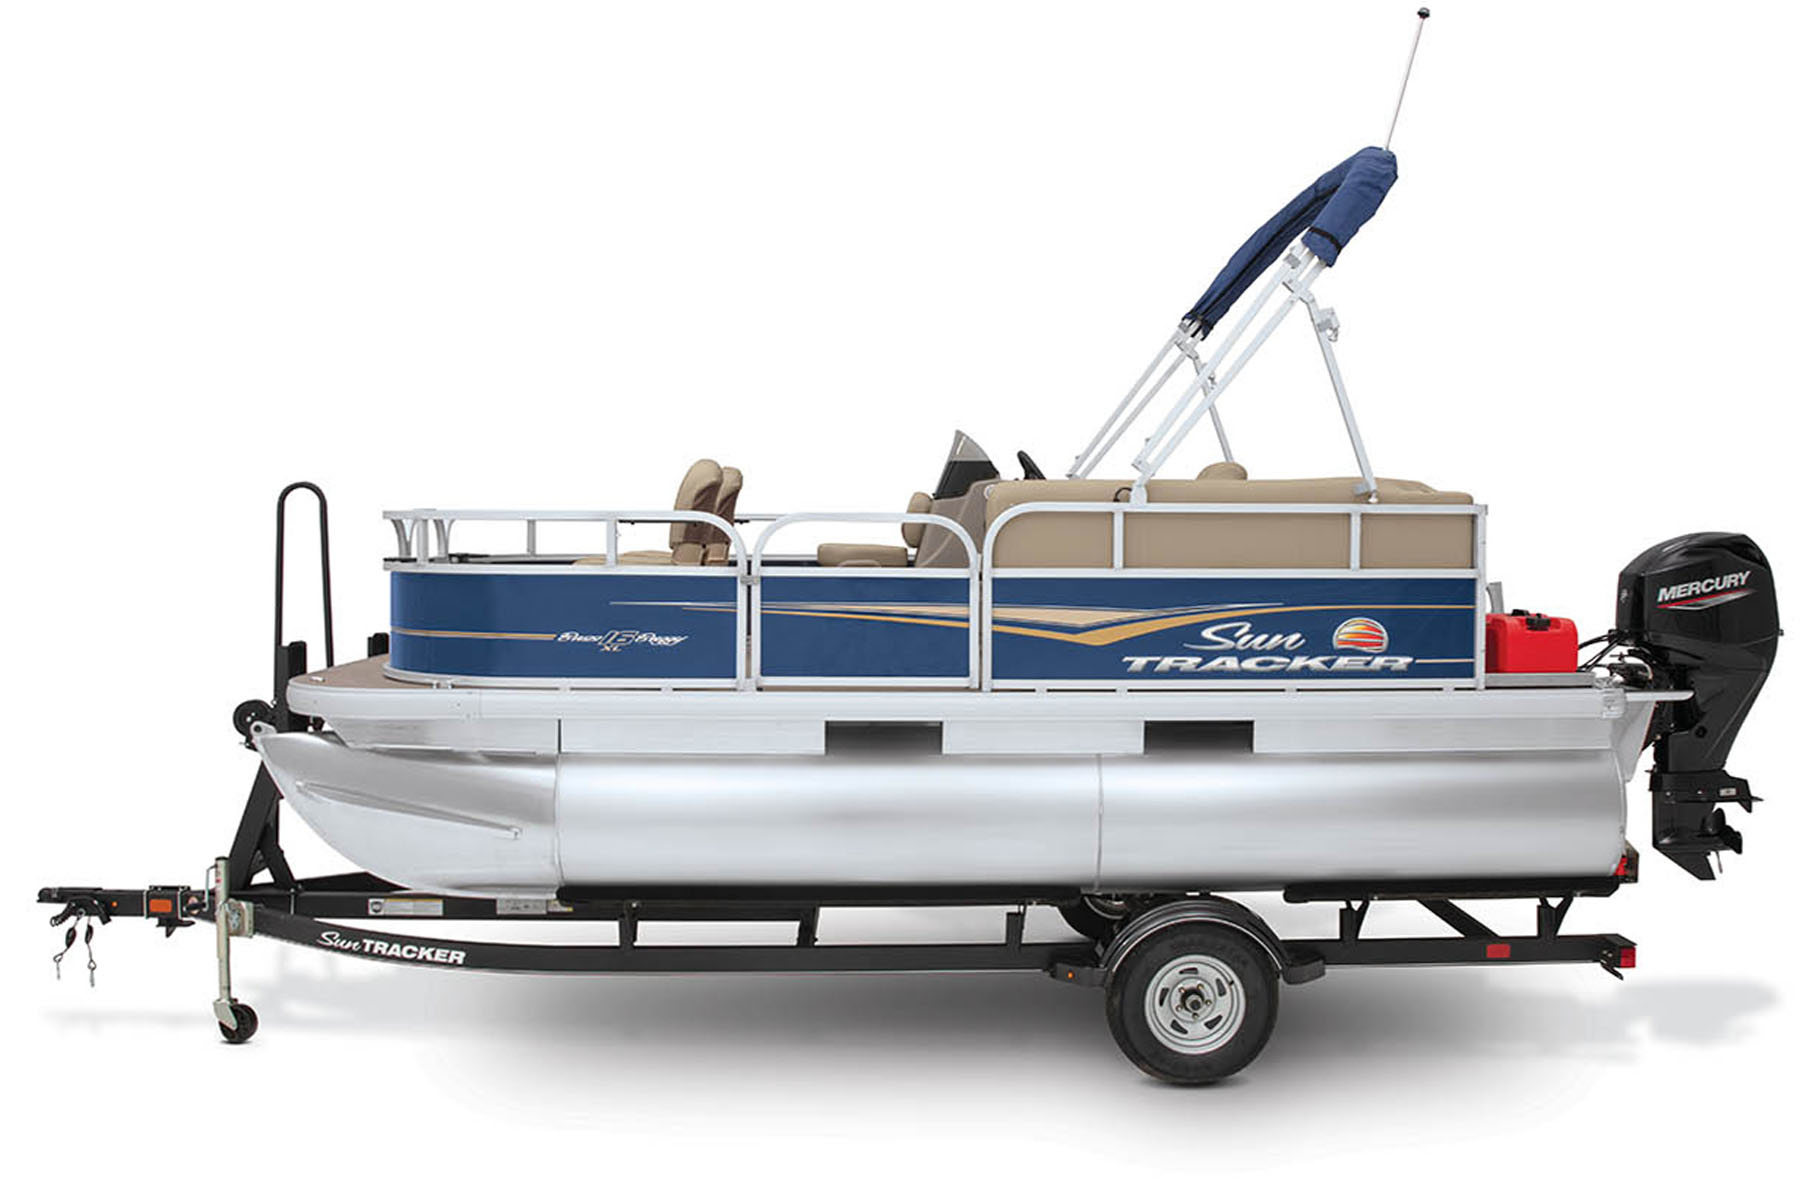 SUN TRACKER Fishing Pontoon Boat. sun tracker pontoon boat accessories. 